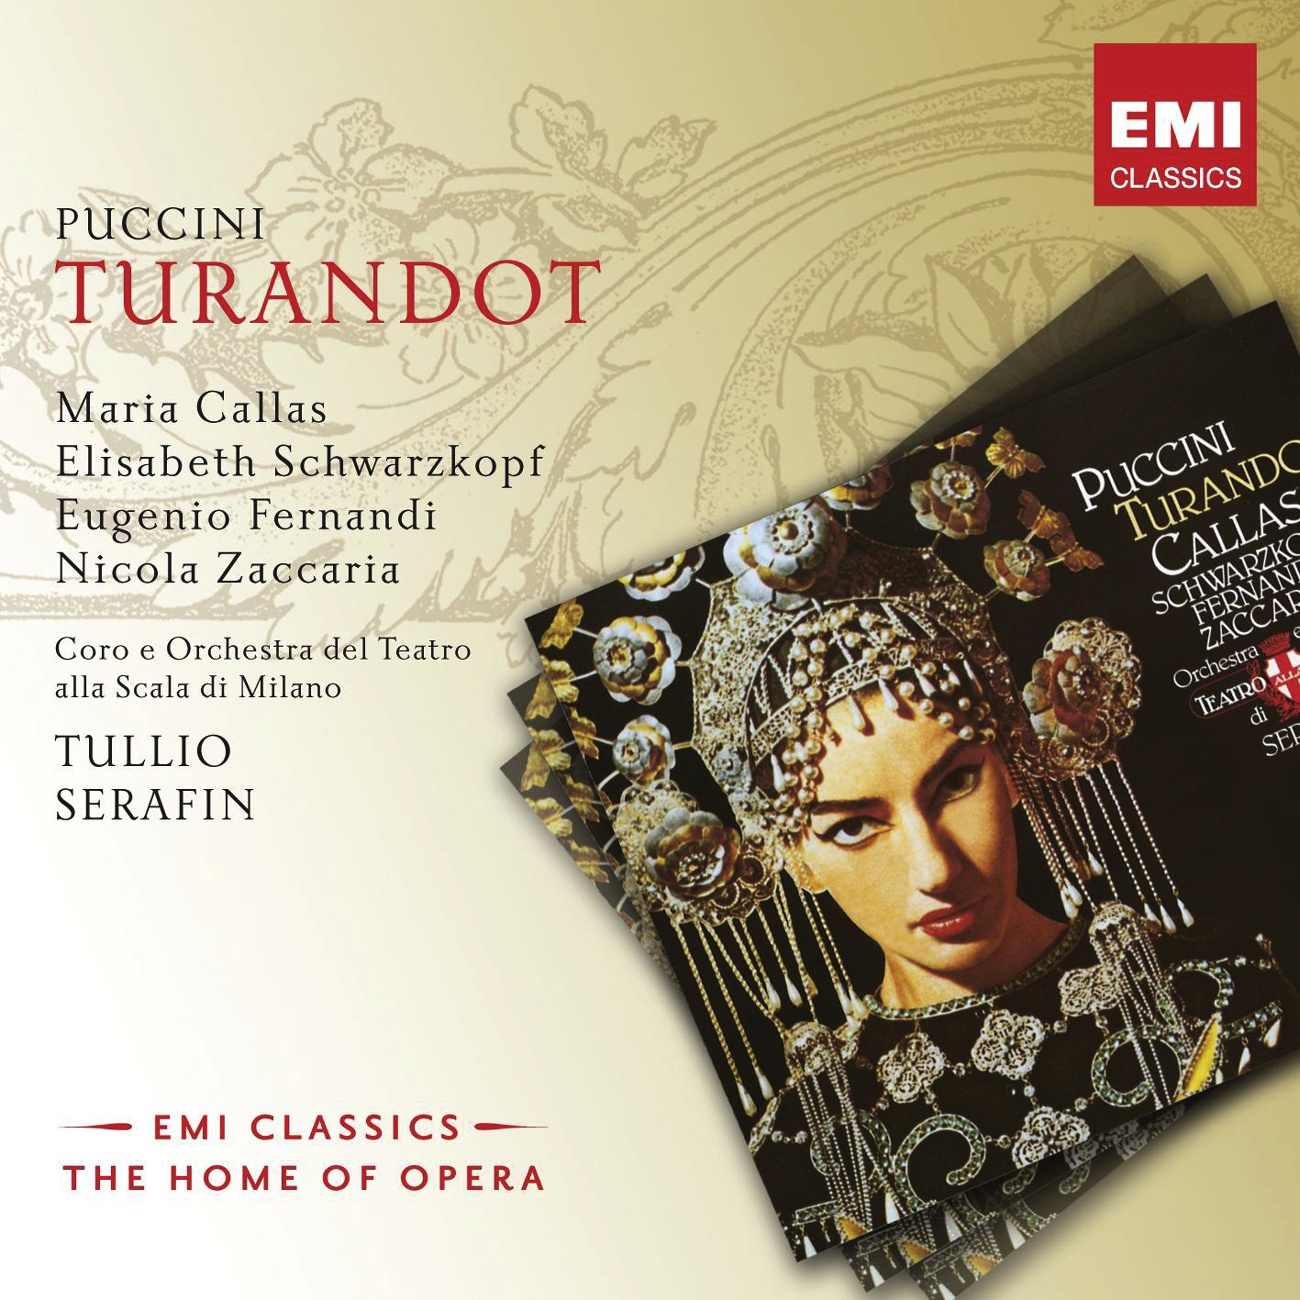 Turandot (2008 Digital Remaster), Act III - Scene II: Diecimilia anni al nostro Imperatore!